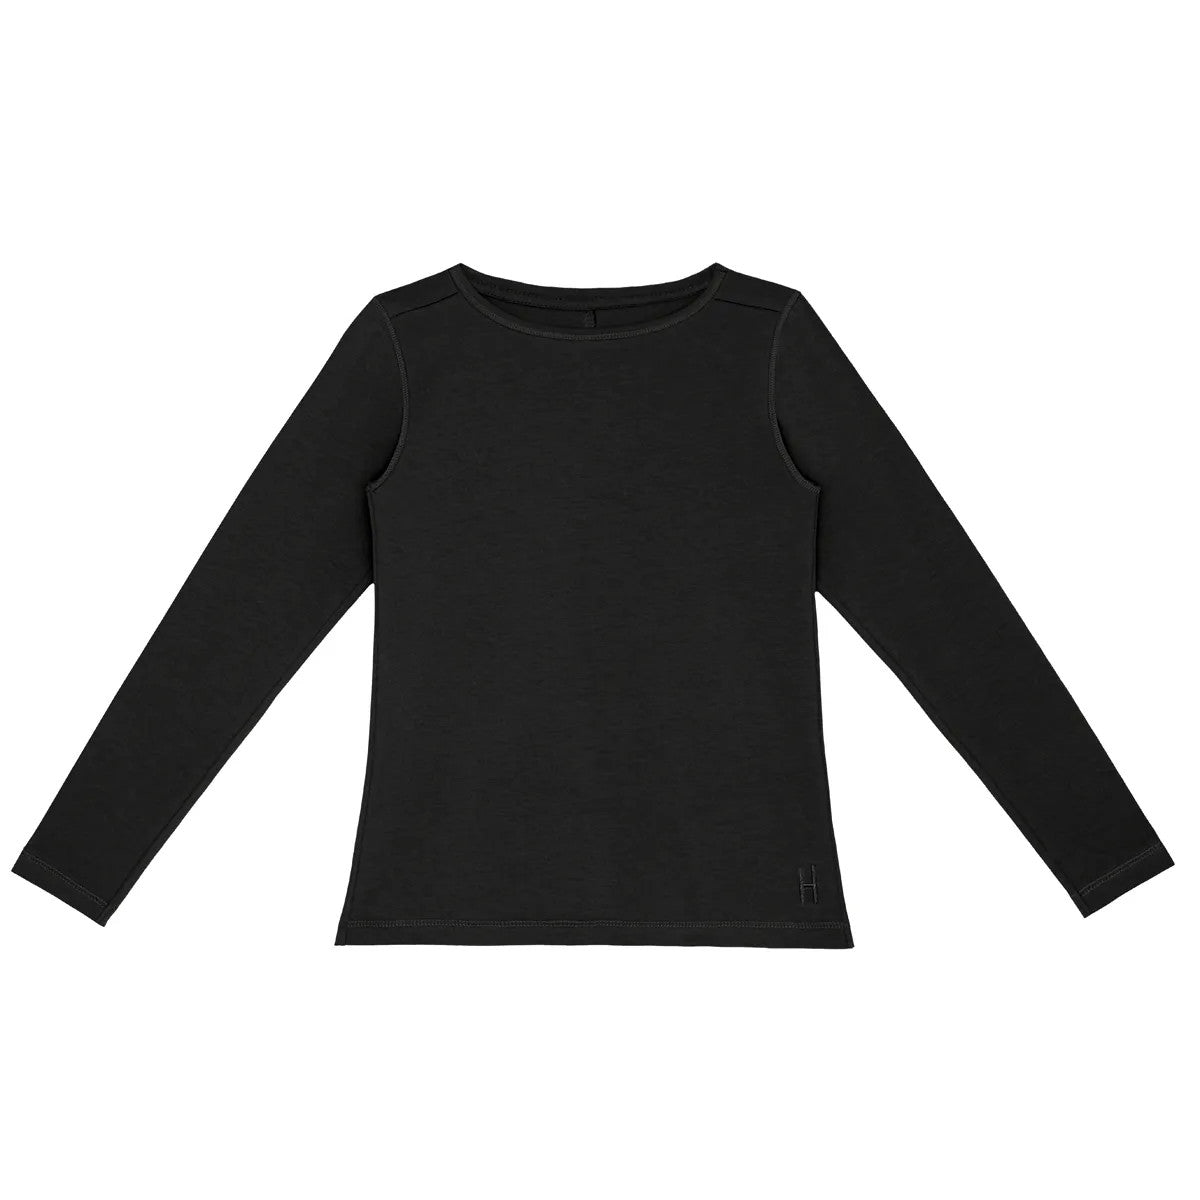 Little Hedonist trans-seasonal unisex organic cotton longsleeve shirt in black